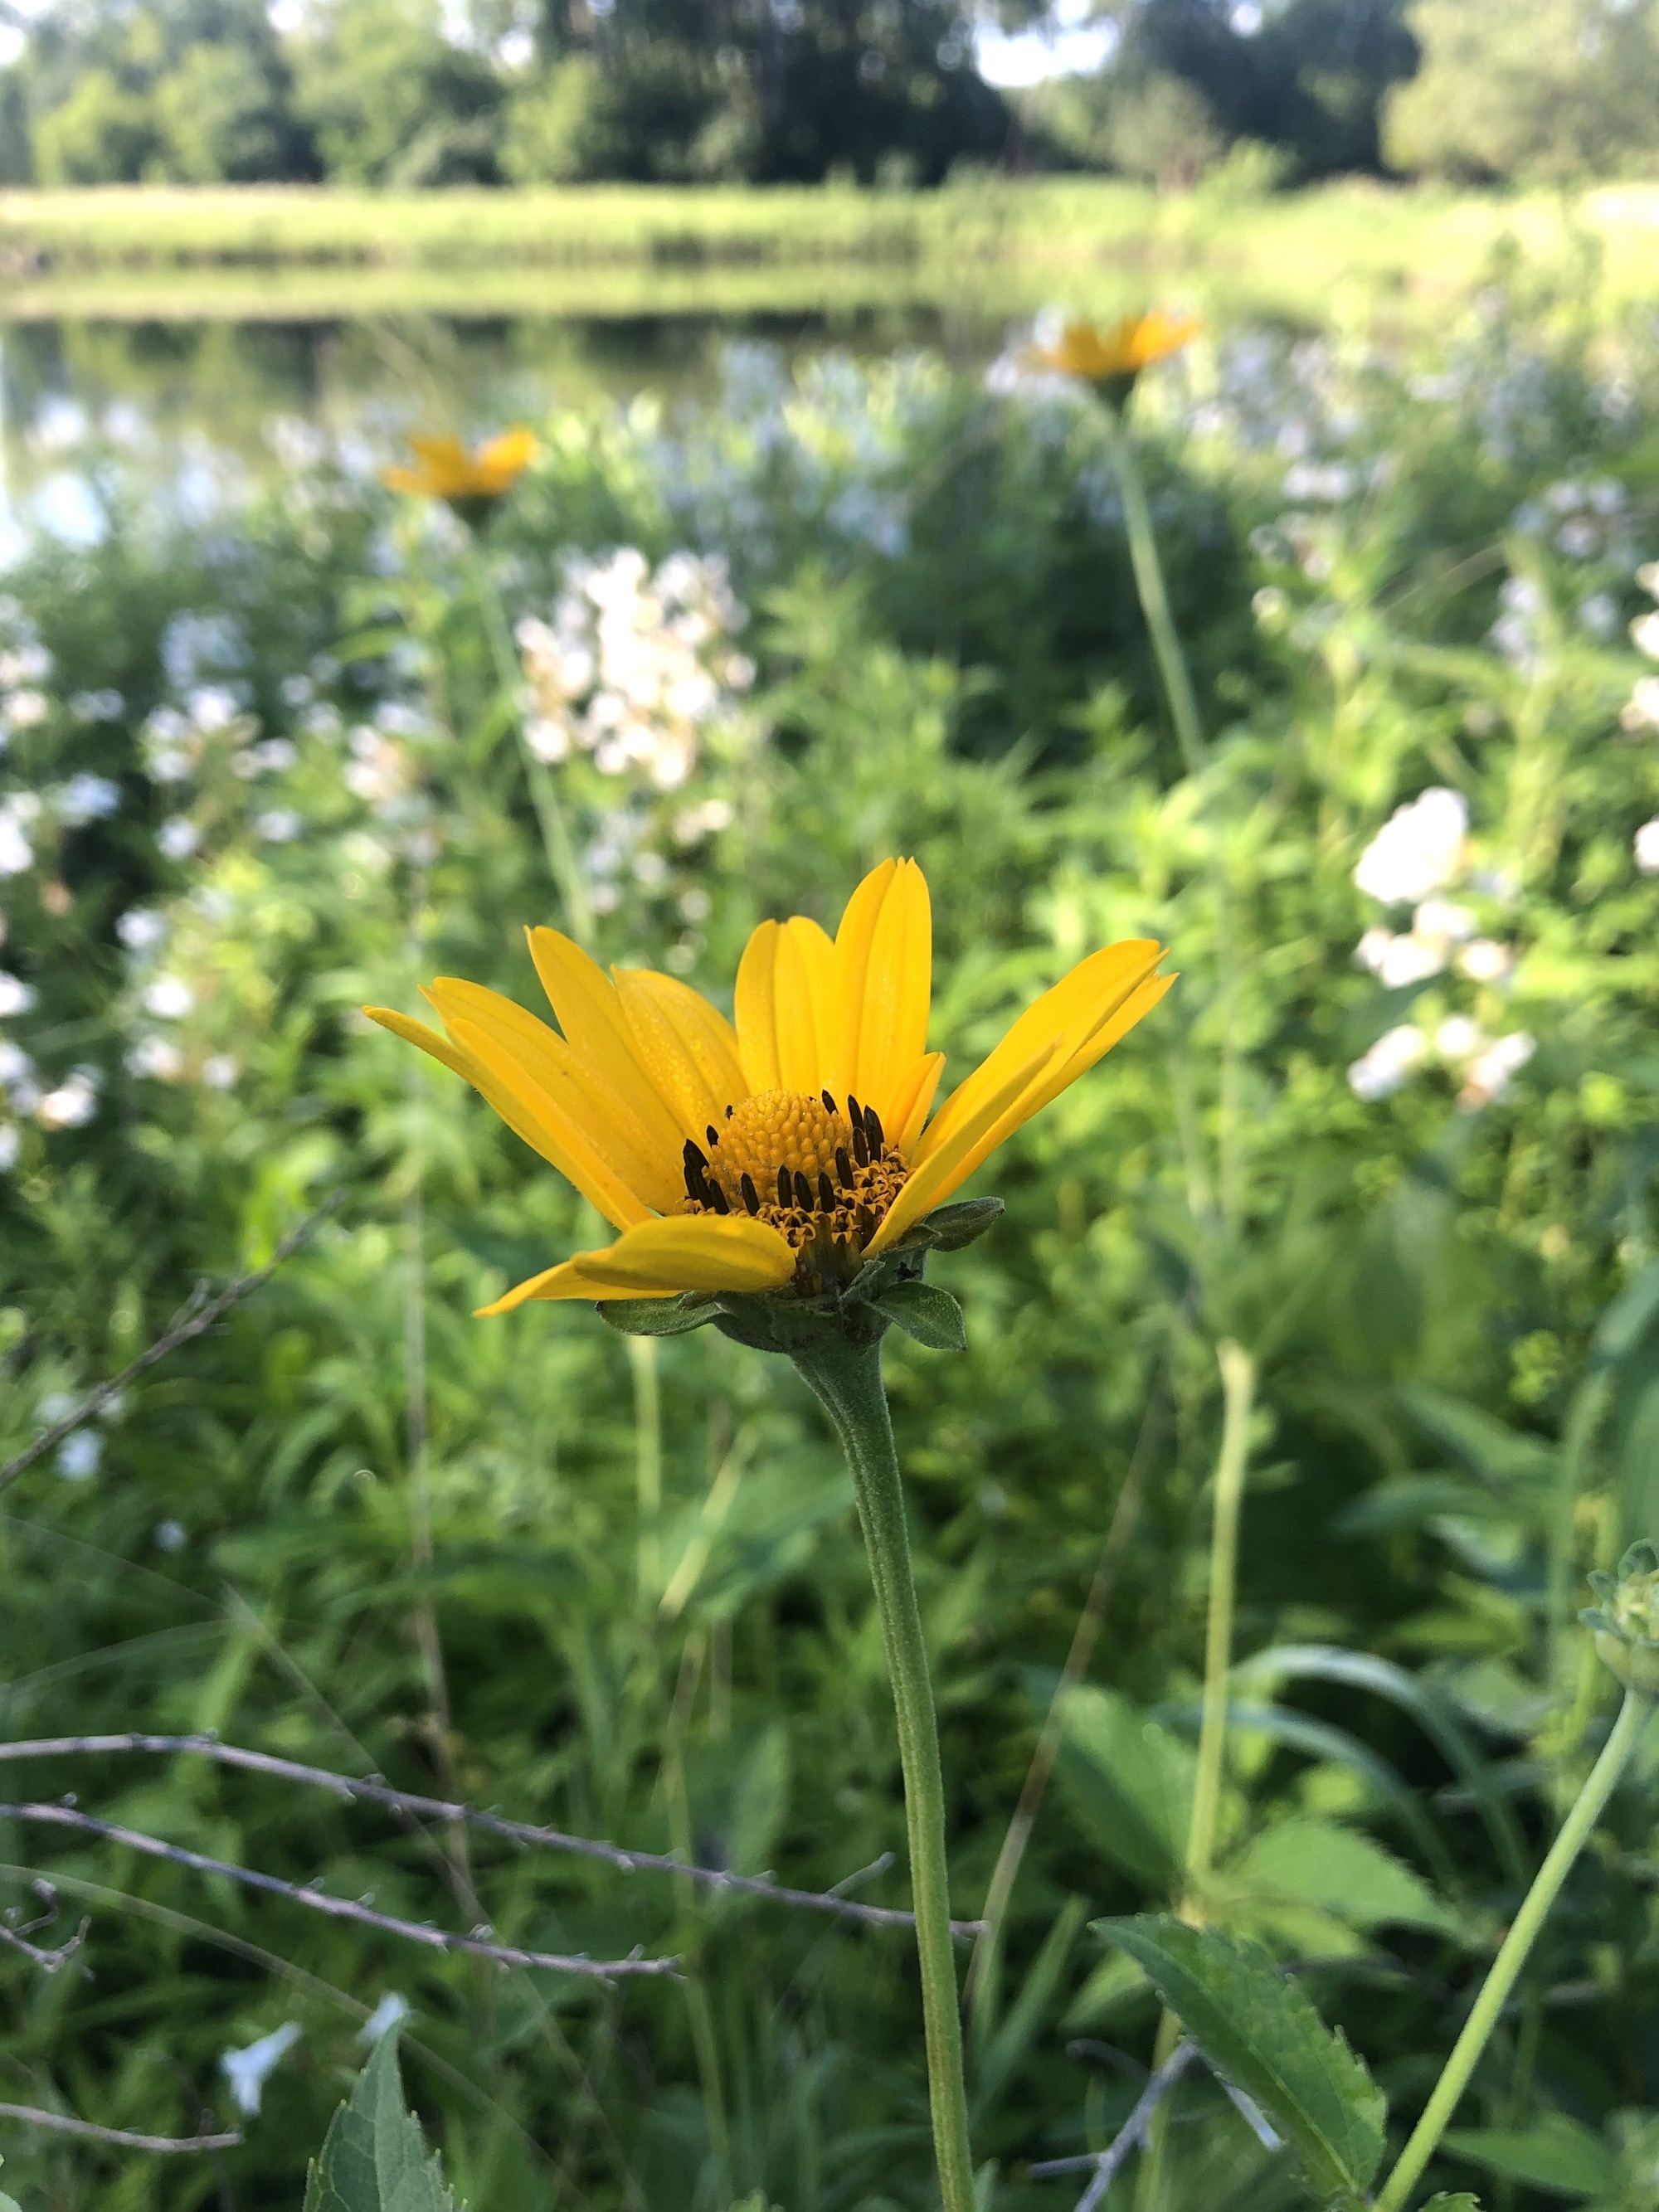 False Sunflower on shore of retaining pond in Madison, Wisconsin on June 23, 2022.